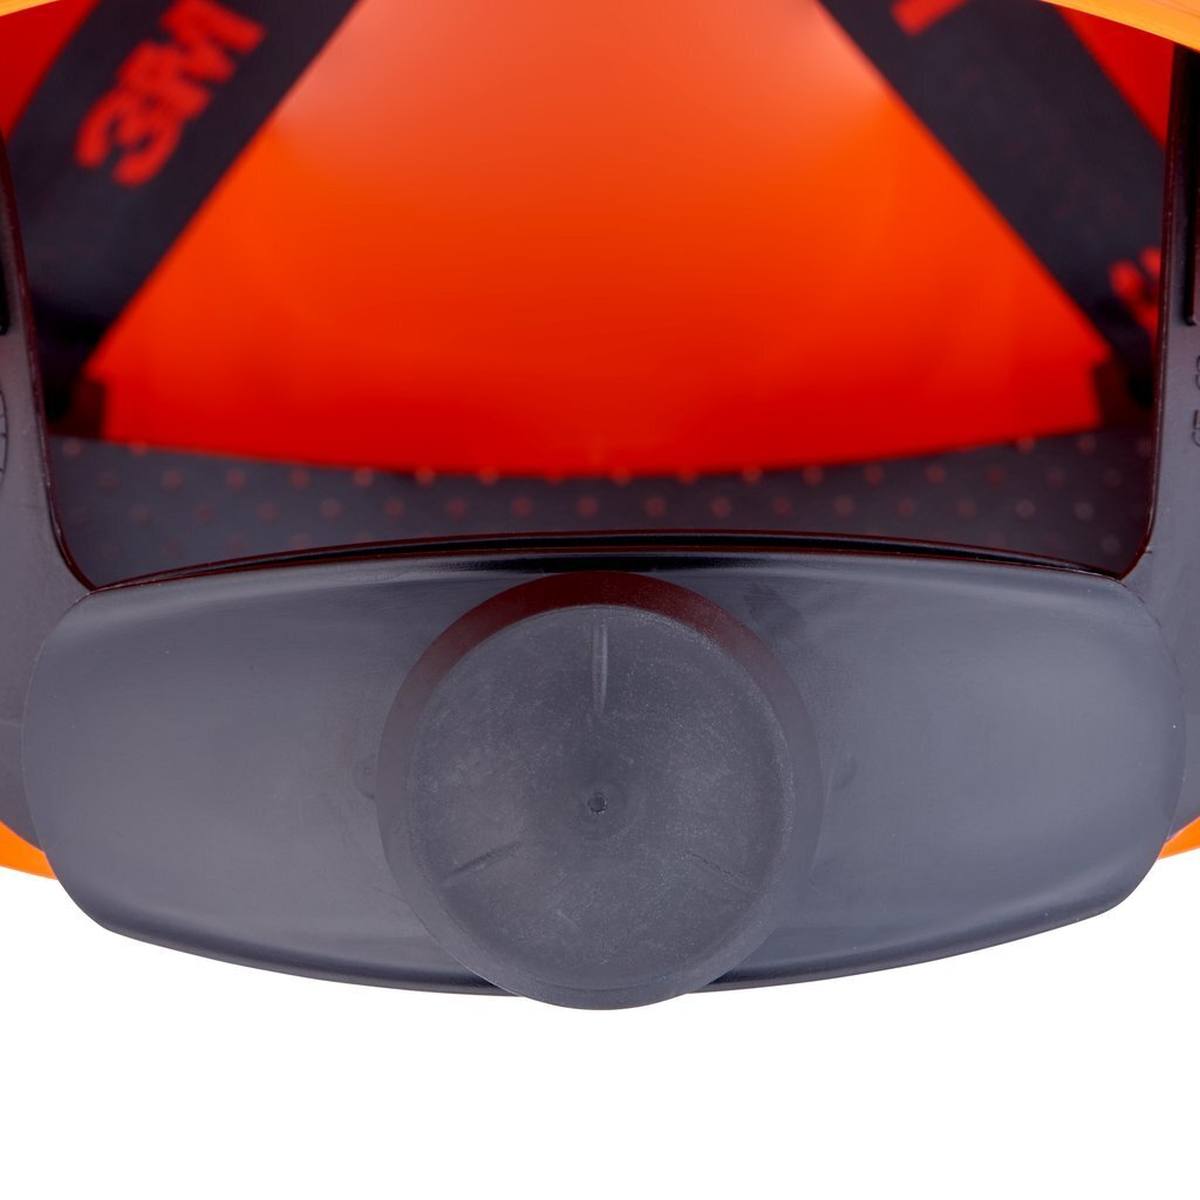 3M G3000 safety helmet with UV indicator, orange, ABS, ventilated ratchet fastener, plastic sweatband, reflective sticker